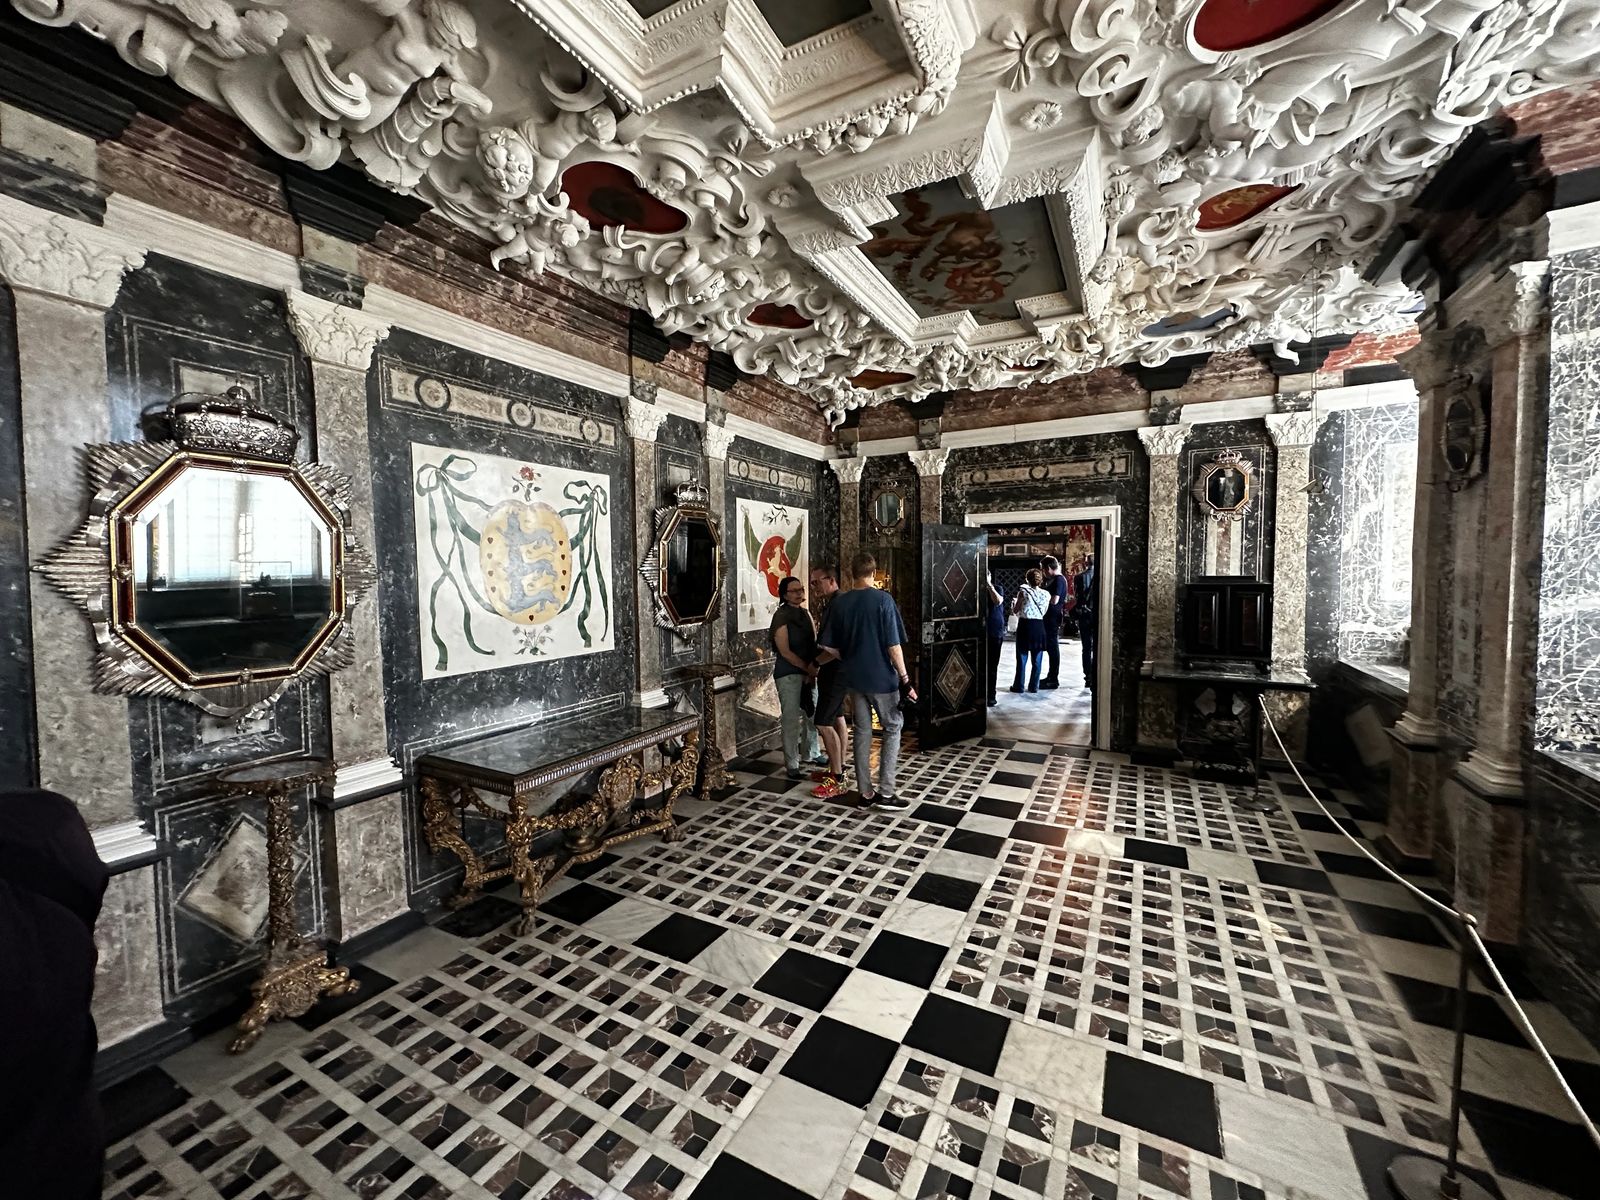 Marble Room inside Rosenborg Castle - unique things to see in Copenhagen